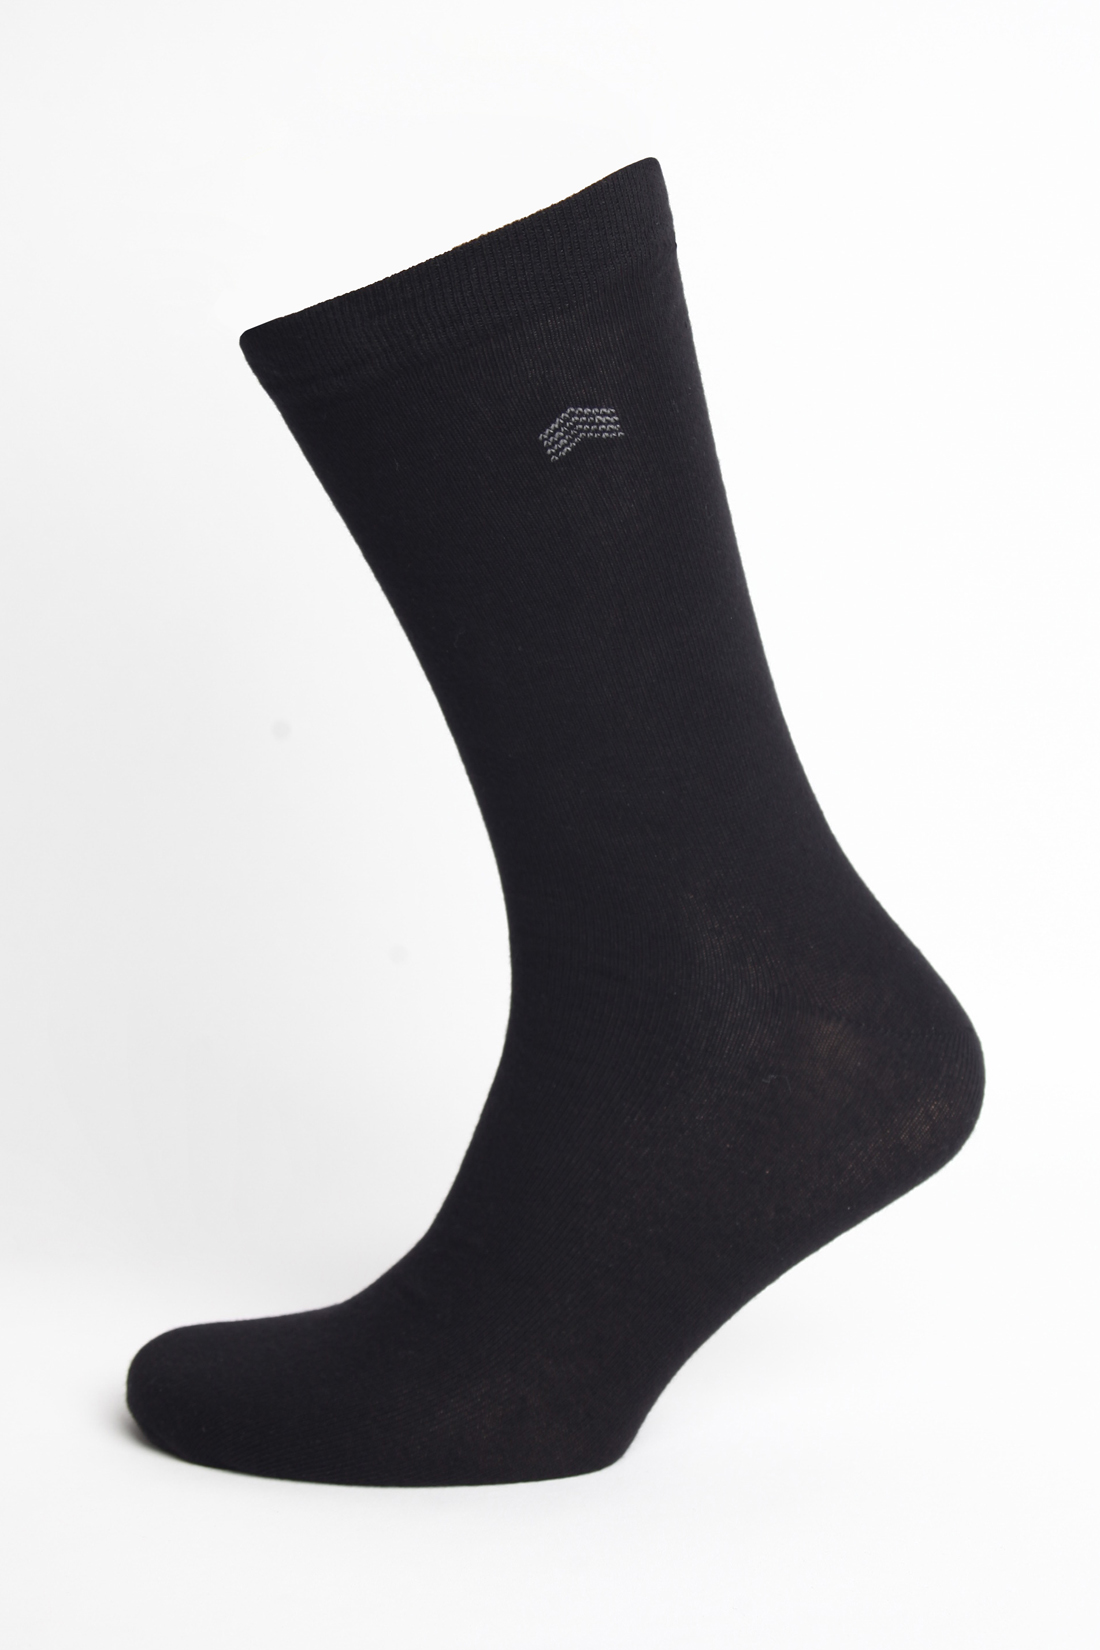 Мужские носки, 2 пары (арт. baon B891101), размер 43/45, цвет черный Мужские носки, 2 пары (арт. baon B891101) - фото 3